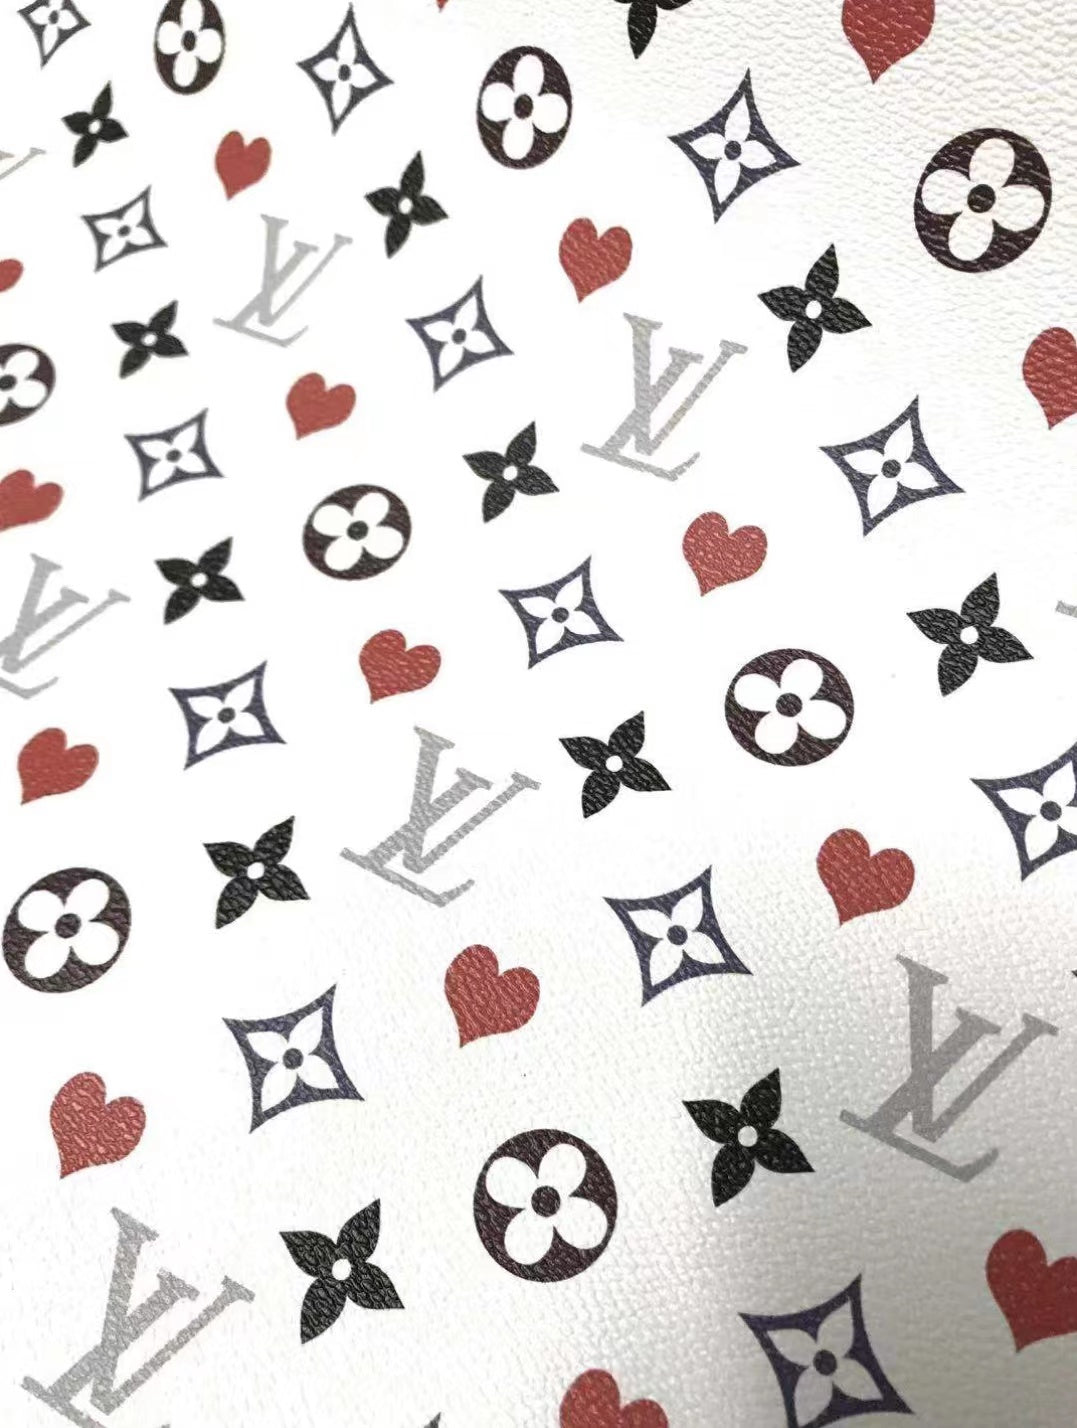 New Trending LV Heart Leather Fabric For Bag